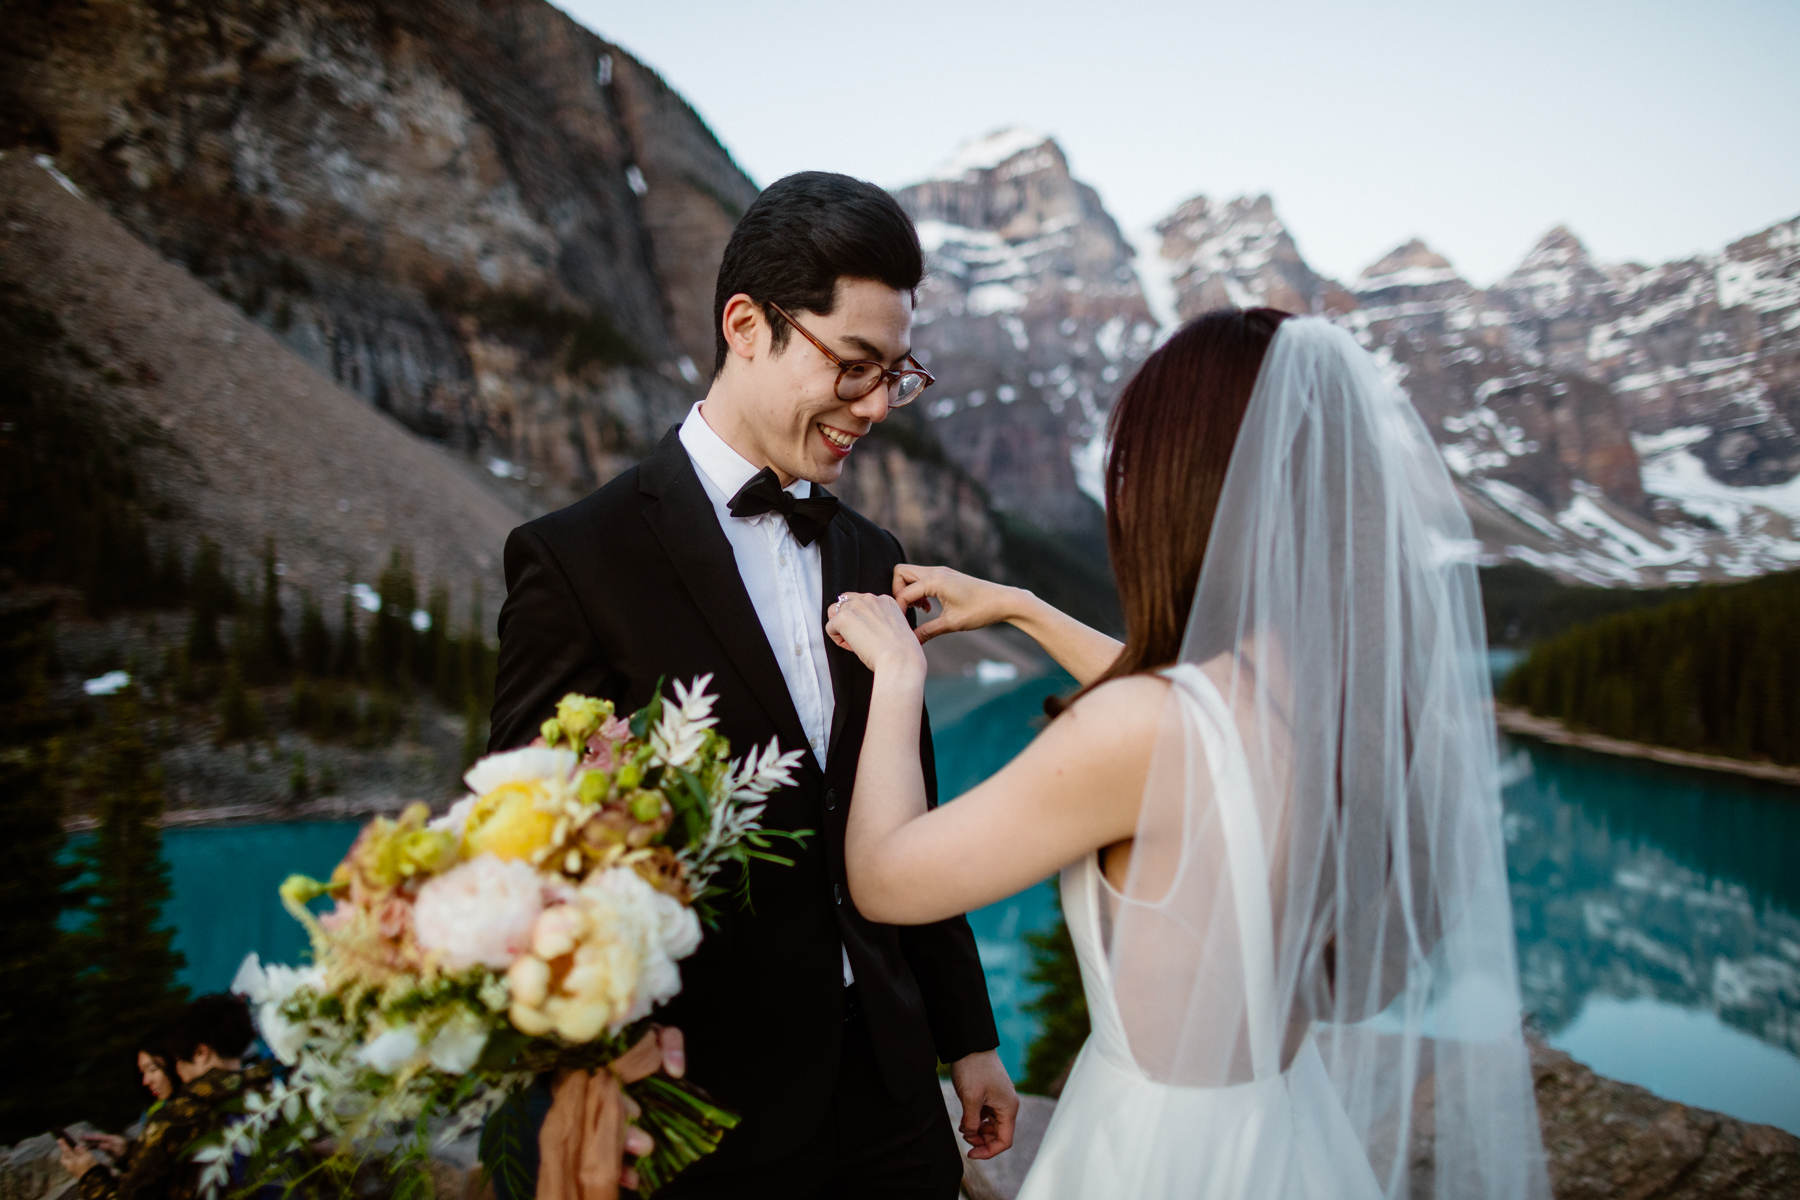 Banff Pre Wedding Photography at Moraine Lake - Photo 1